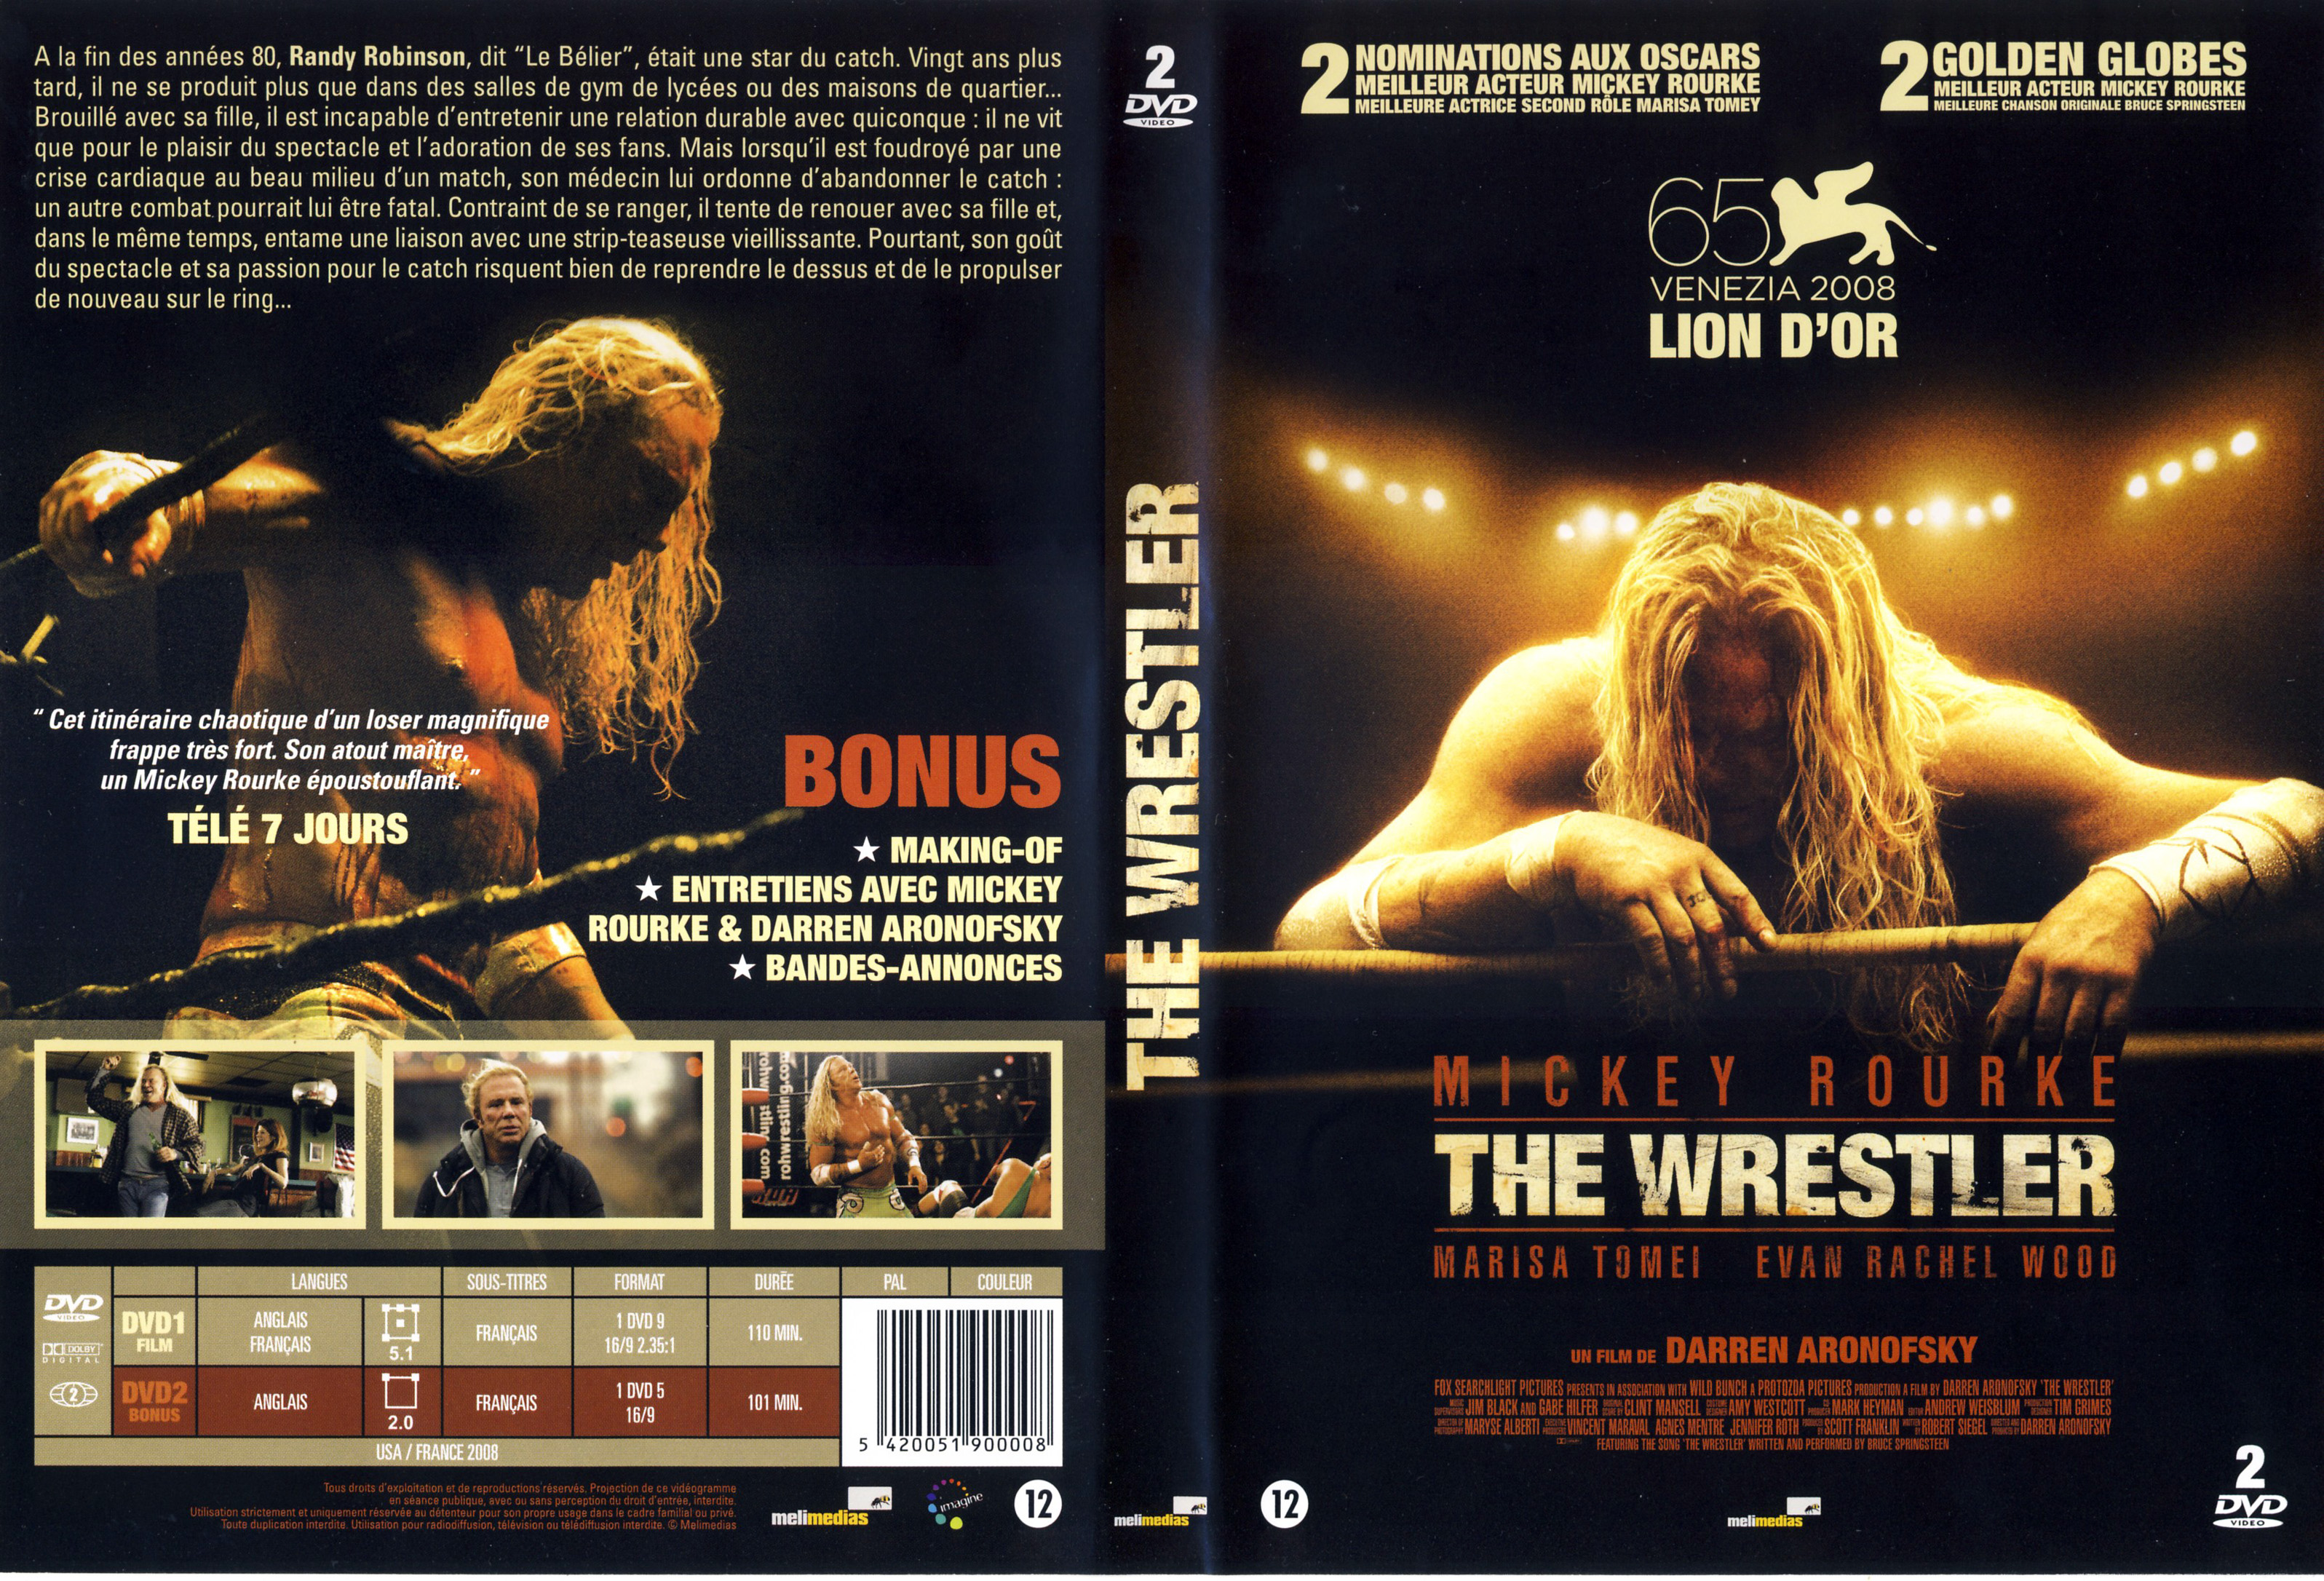 Jaquette DVD The wrestler